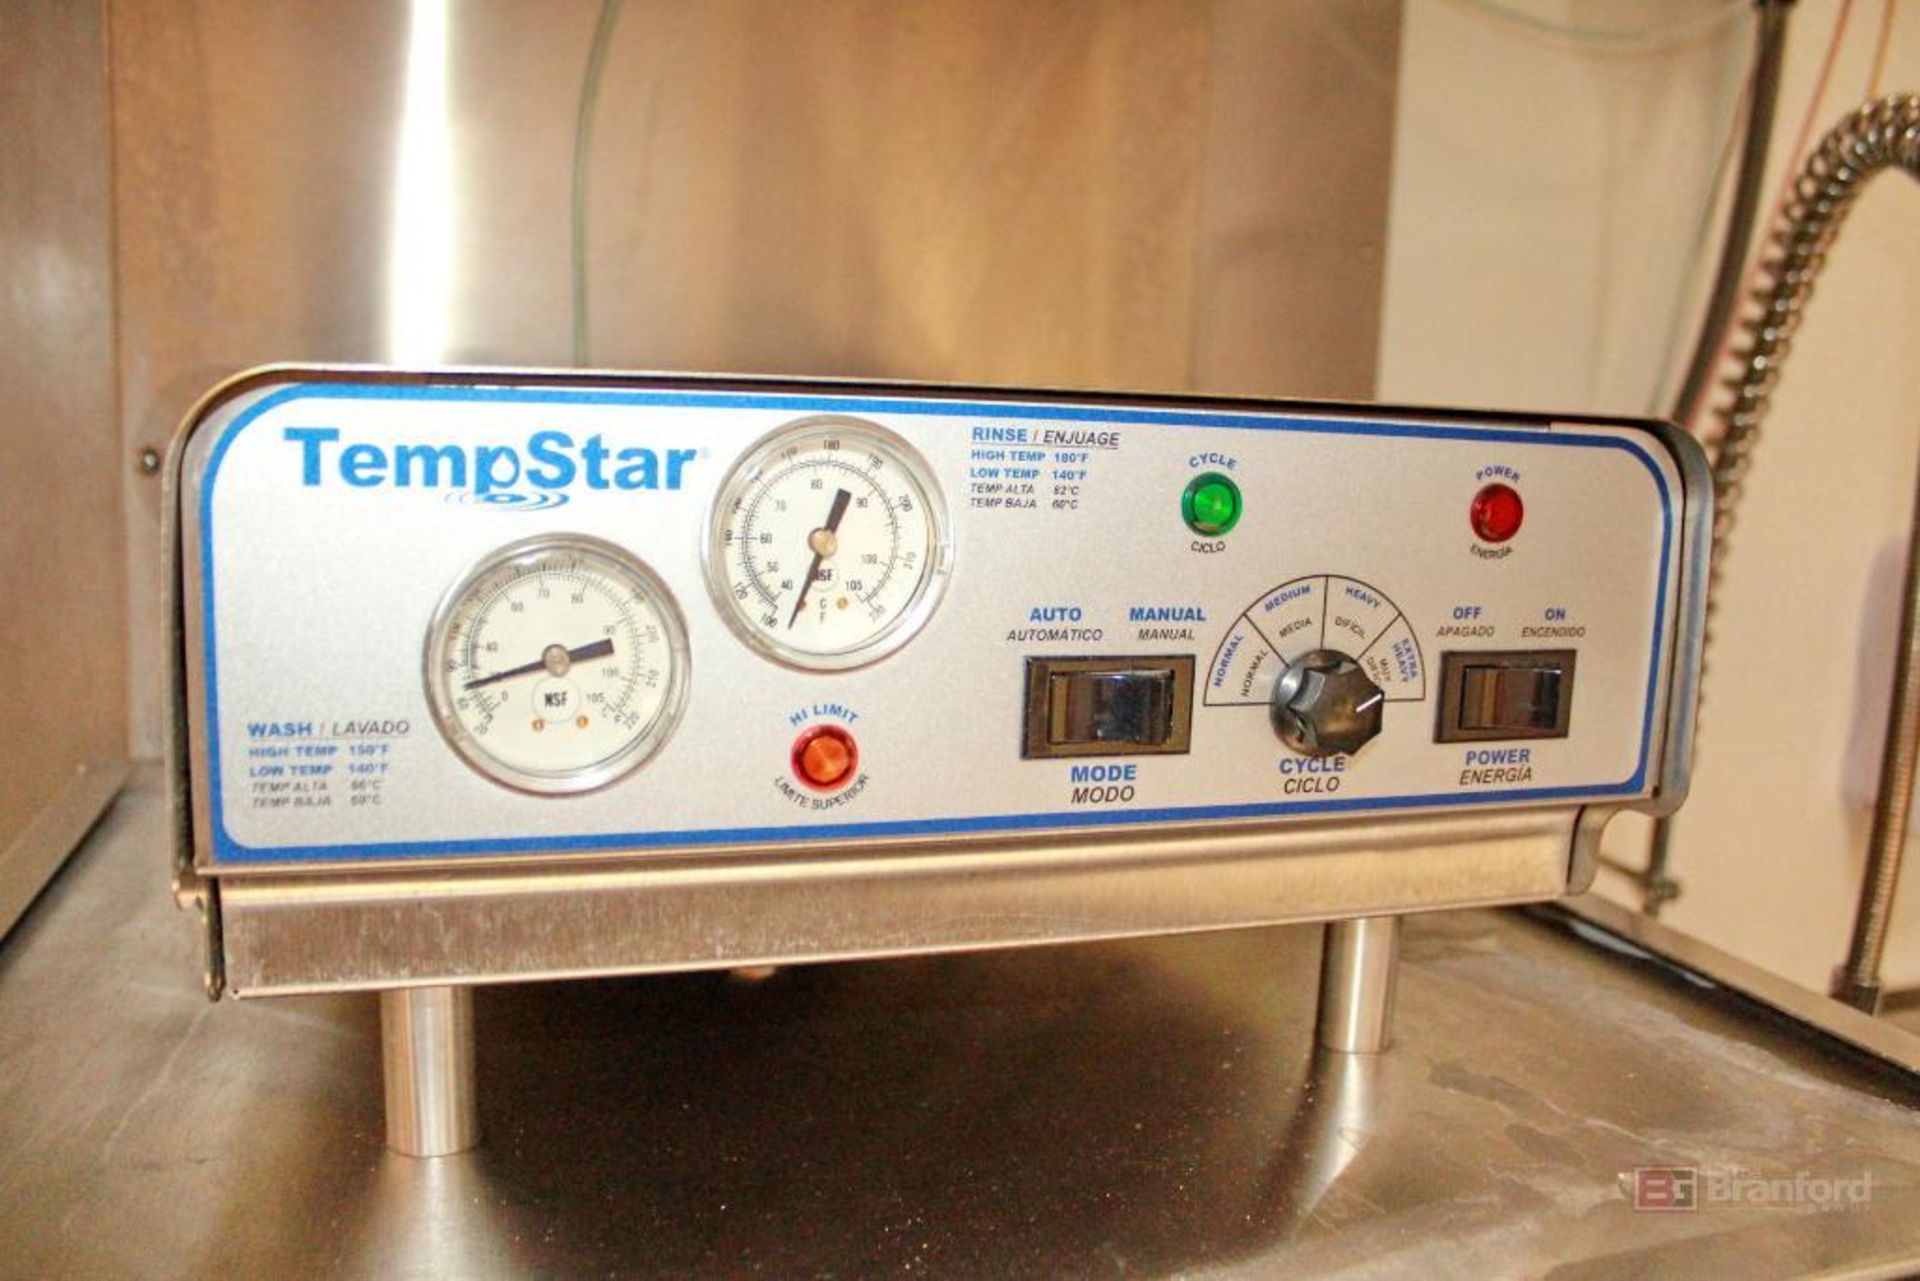 Jackson TEMPSTAR Commercial Dishwasher Model Tempstar-VER - Image 3 of 10